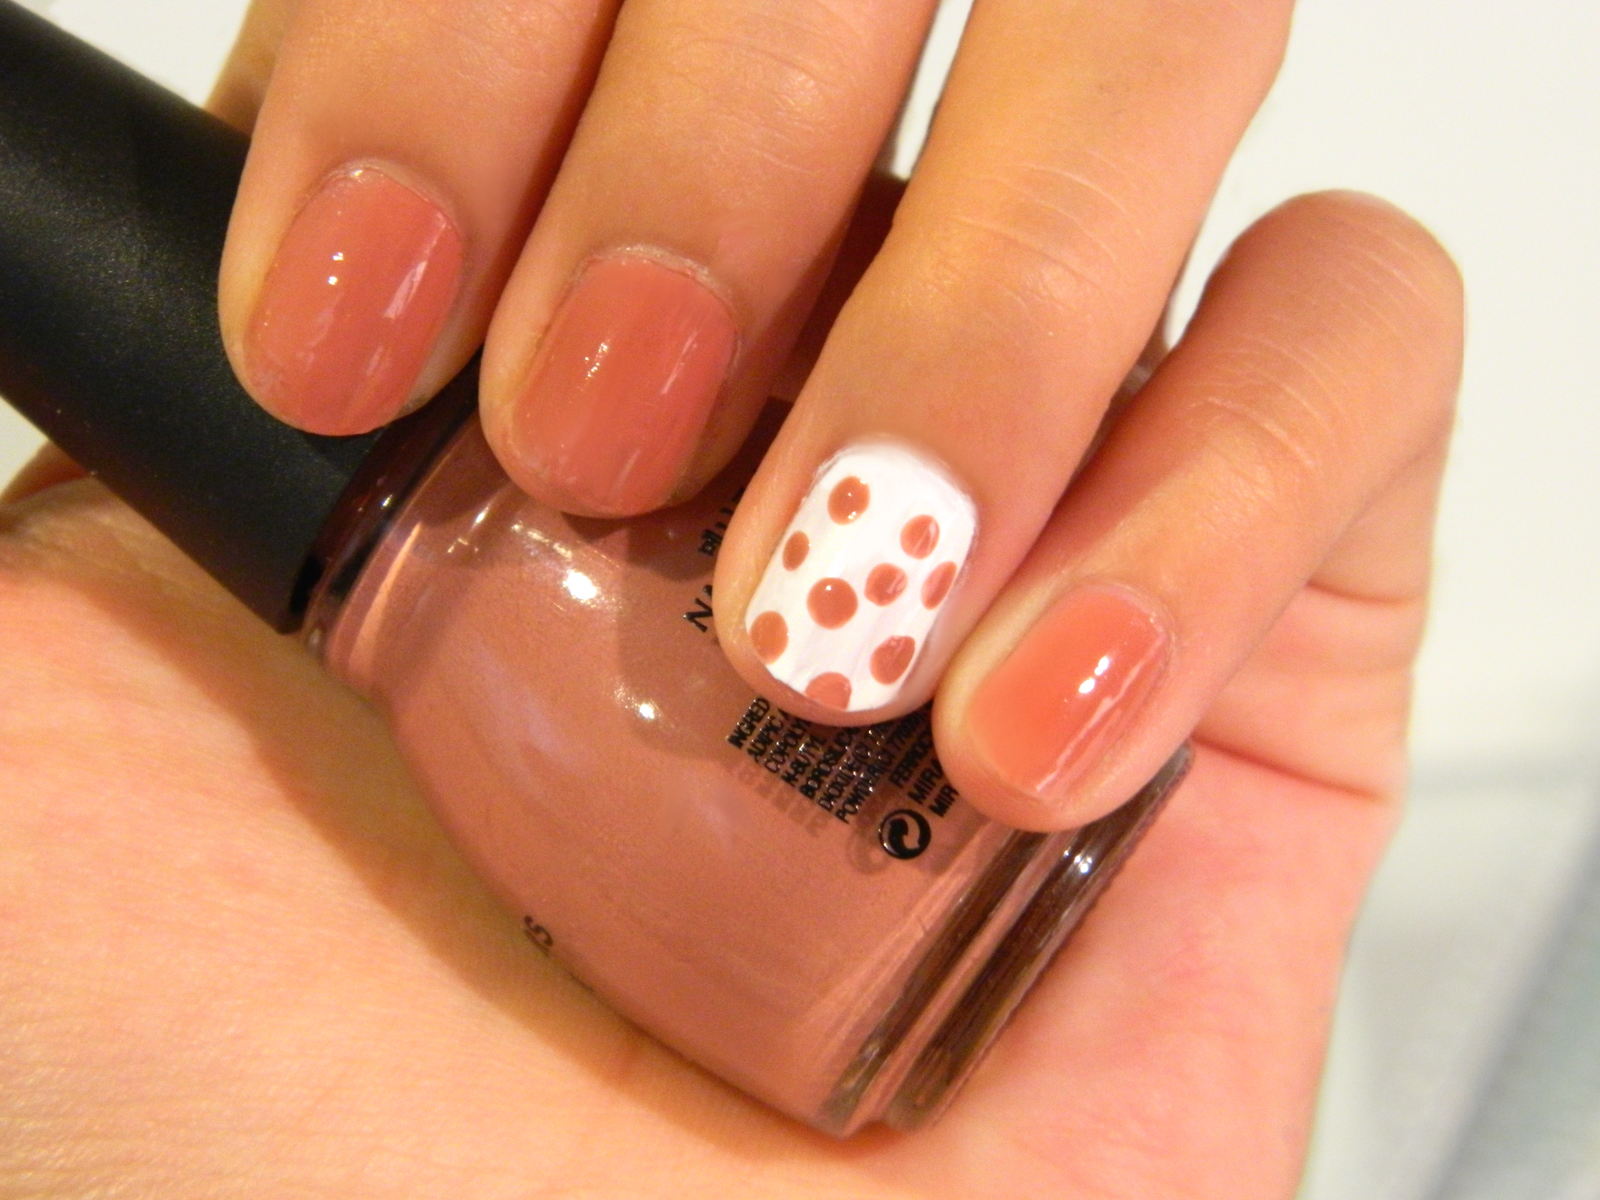 6. Purple polka dot nail art ideas - wide 1